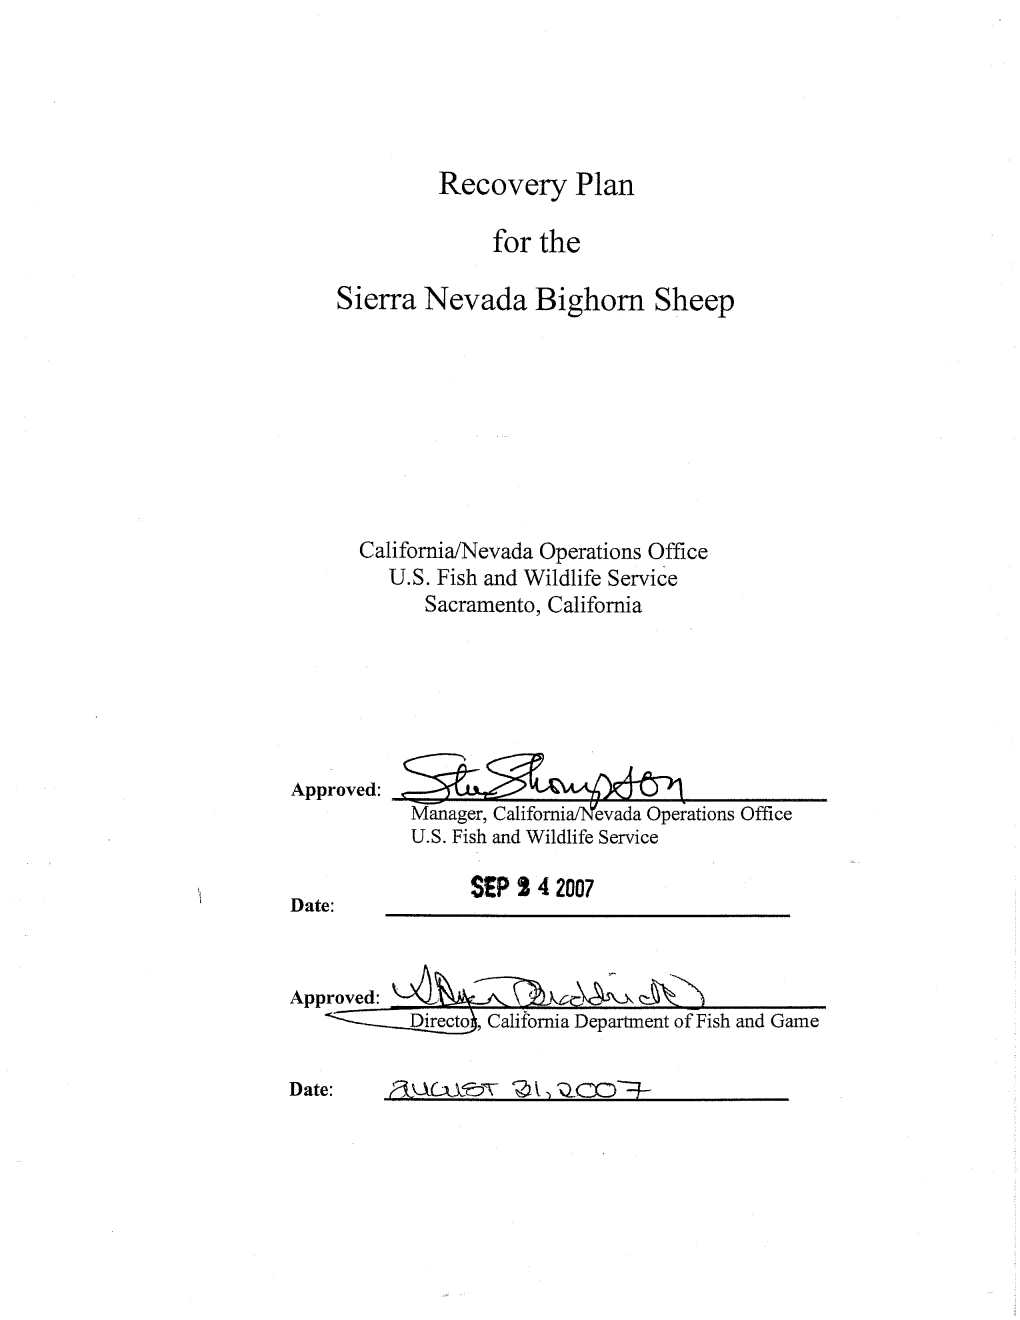 Sierra Nevada Bighorn Sheep Recovery Plan